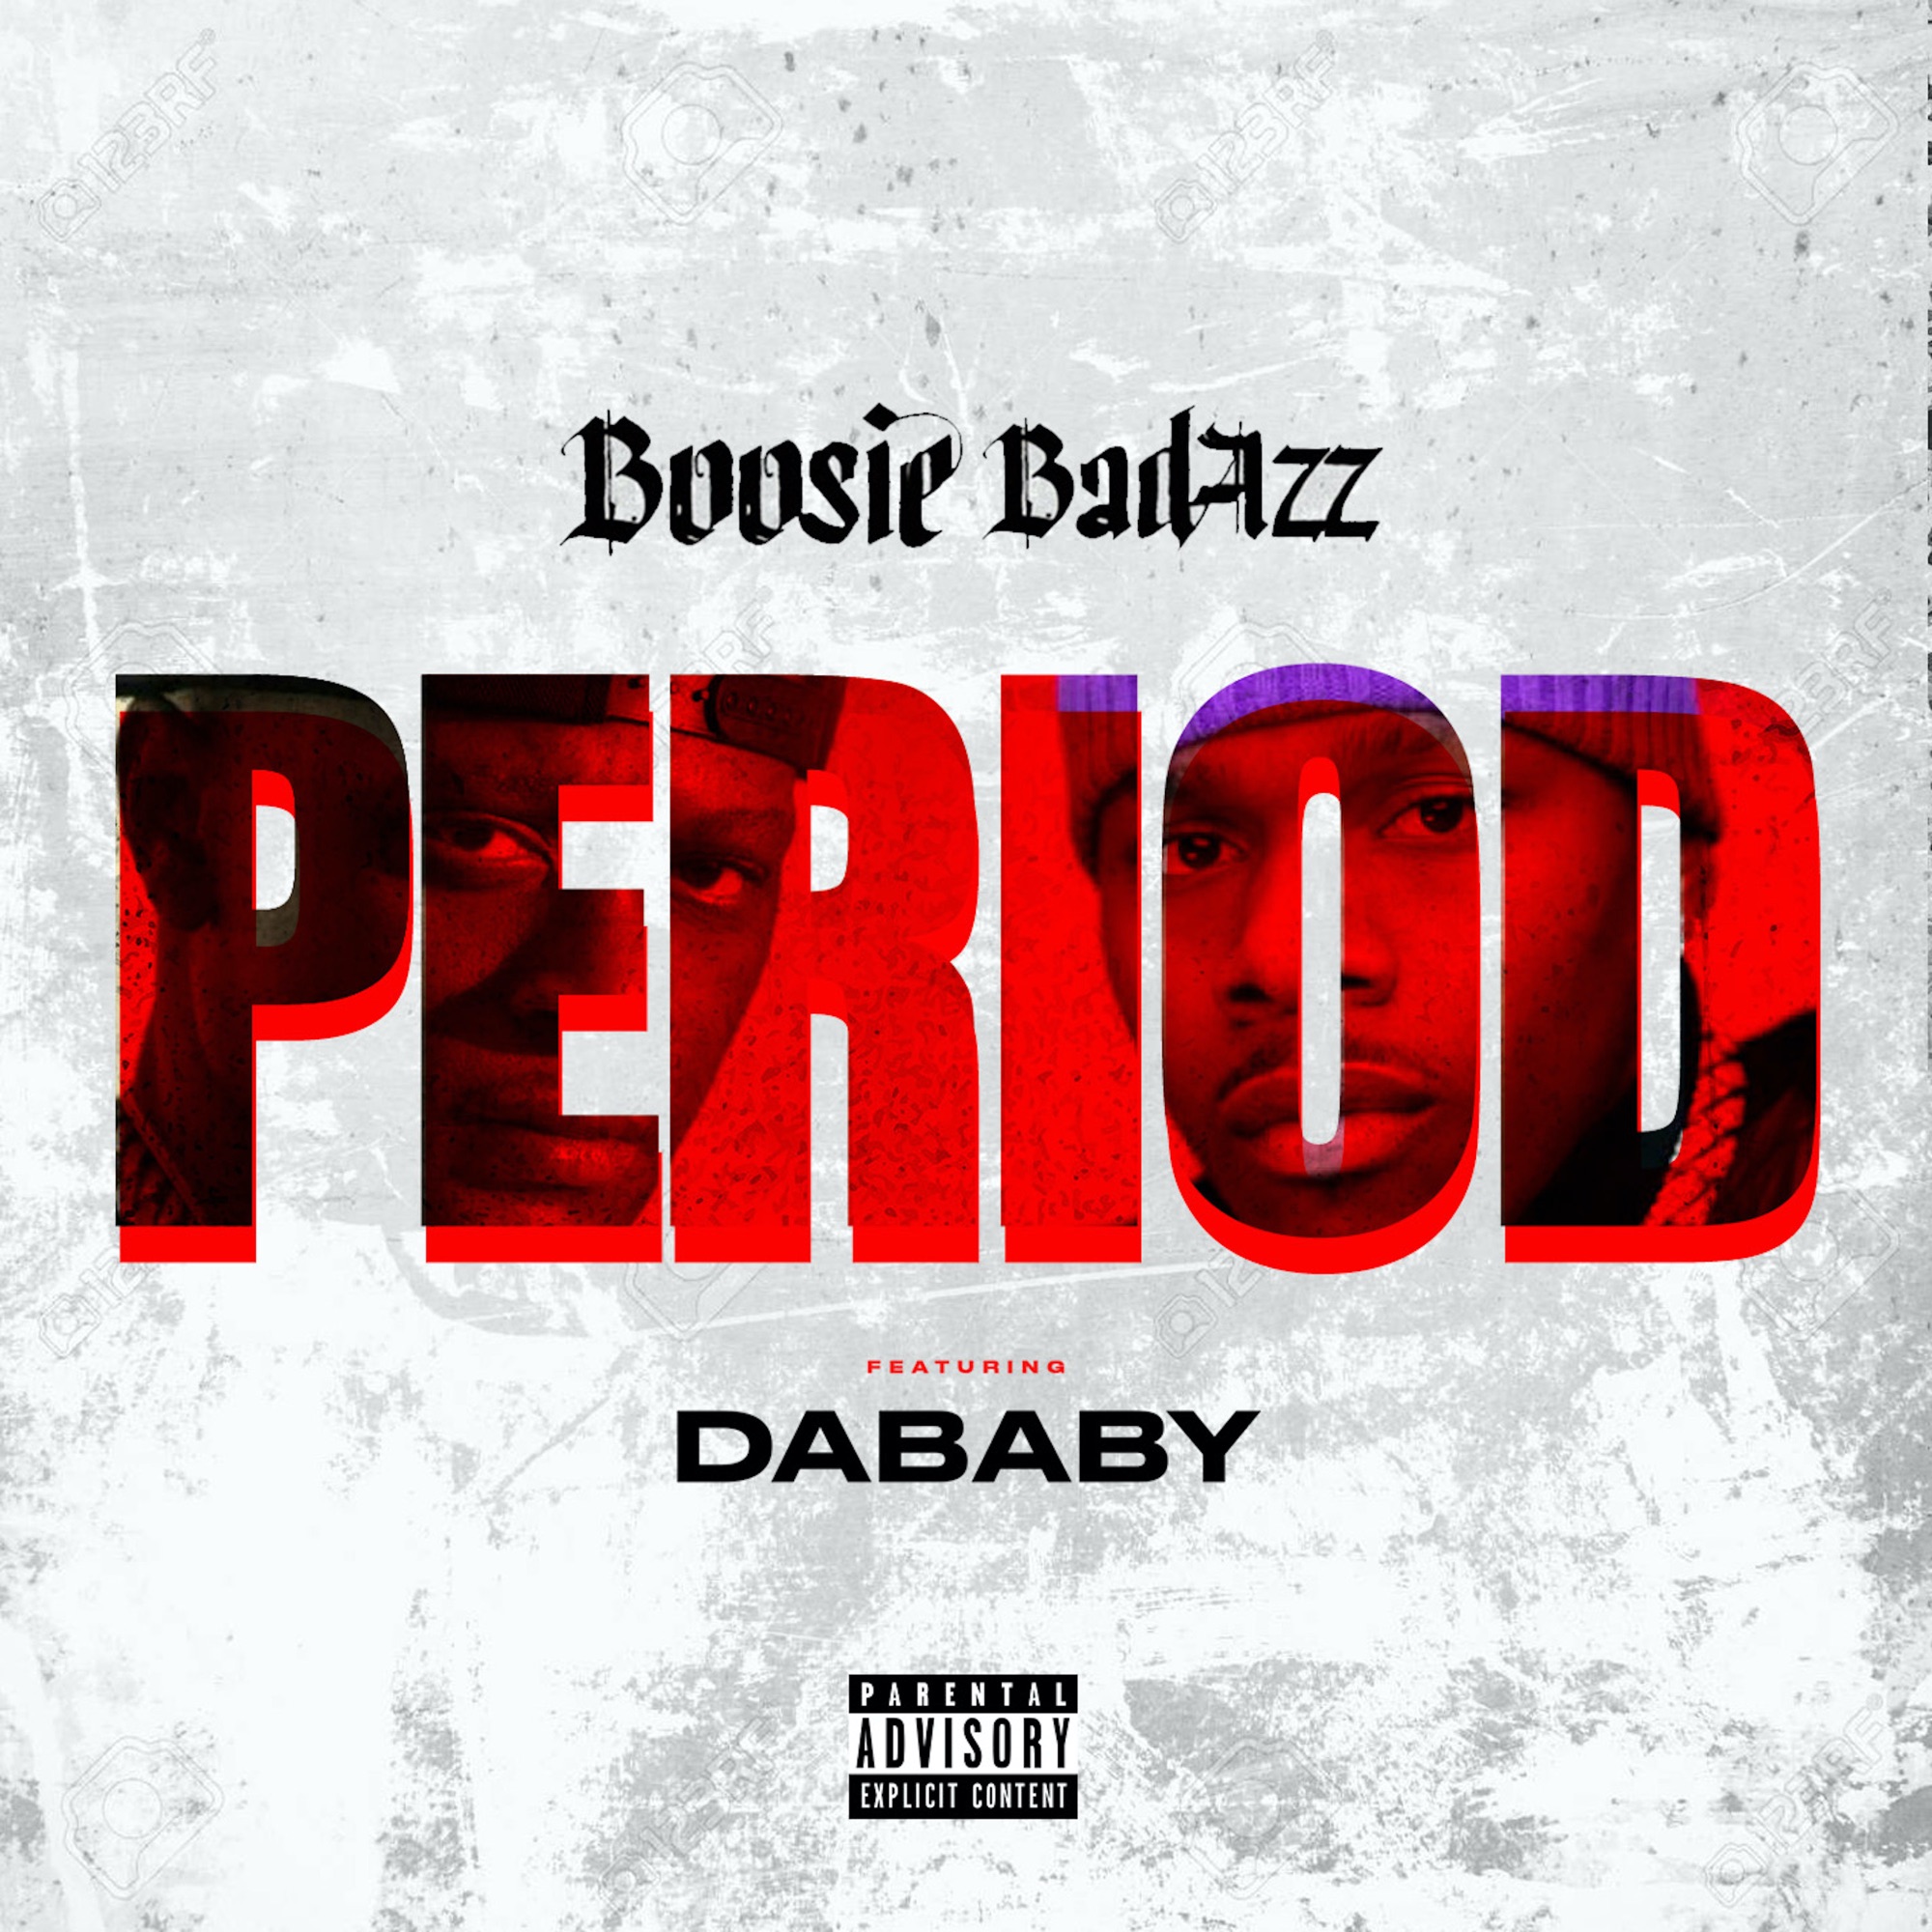 Boosie Badazz - Period (feat. DaBaby) - Single